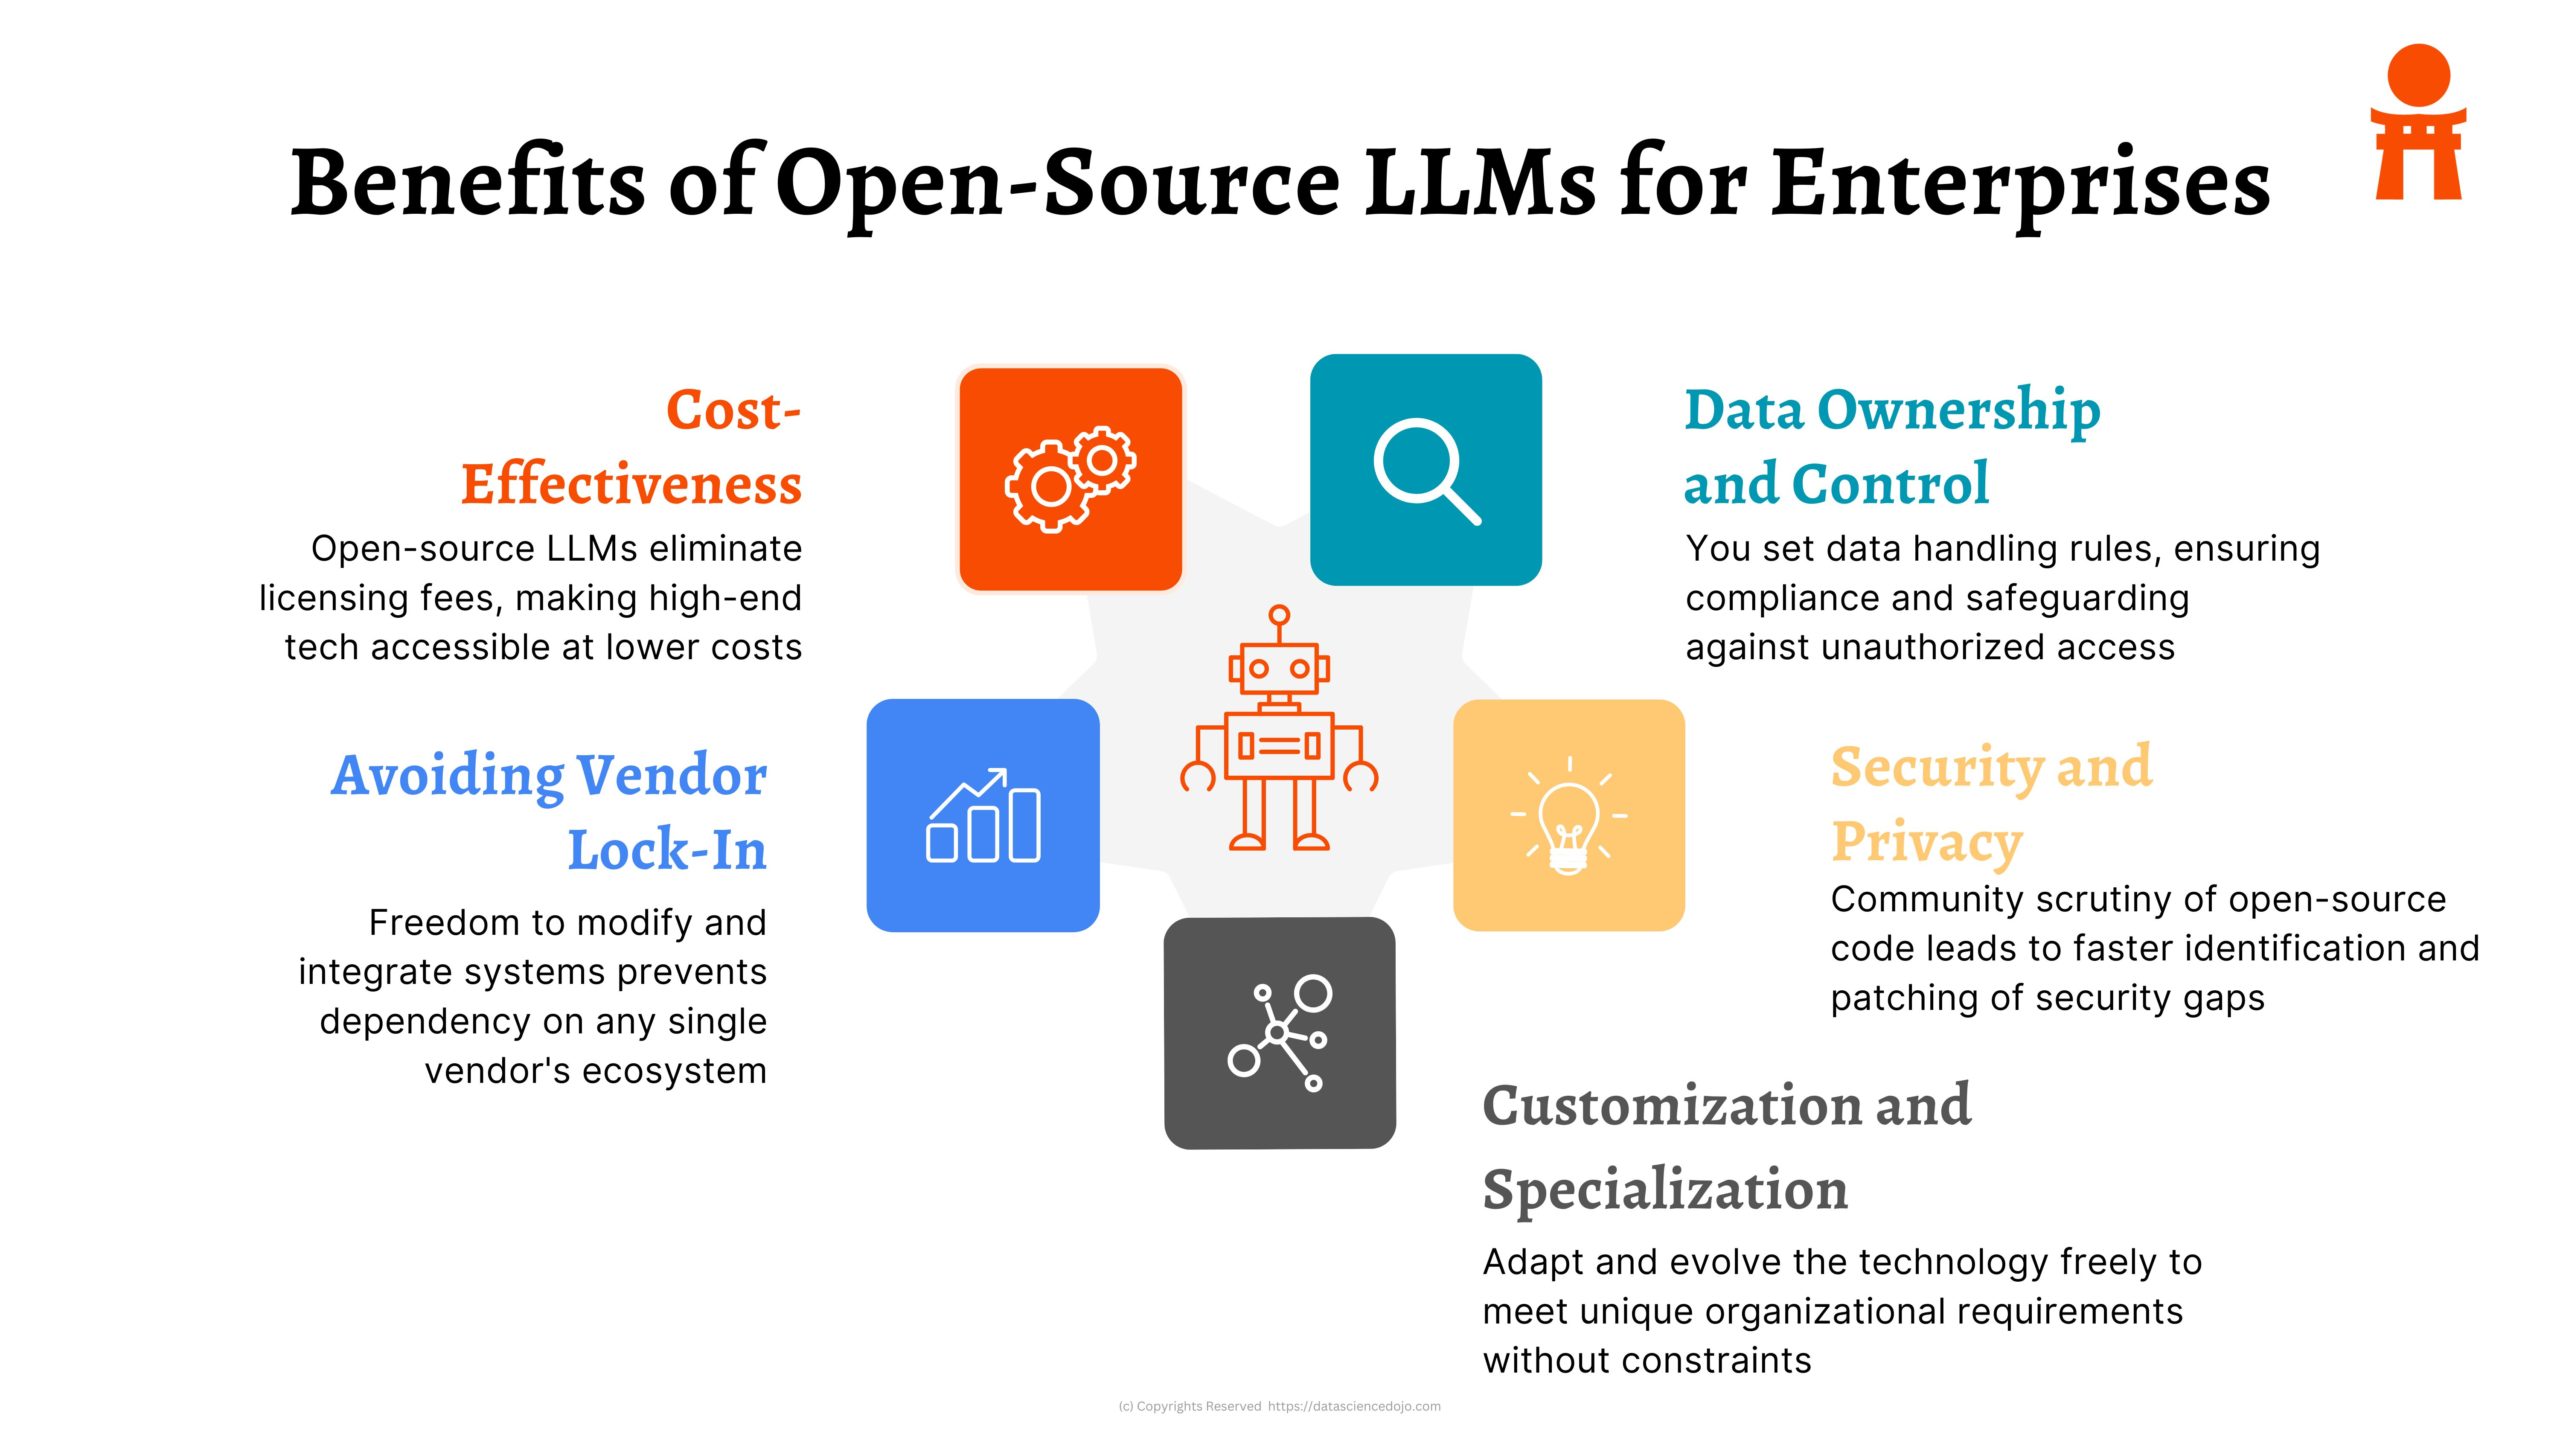 Benefits of Open-Source large language models LLMs